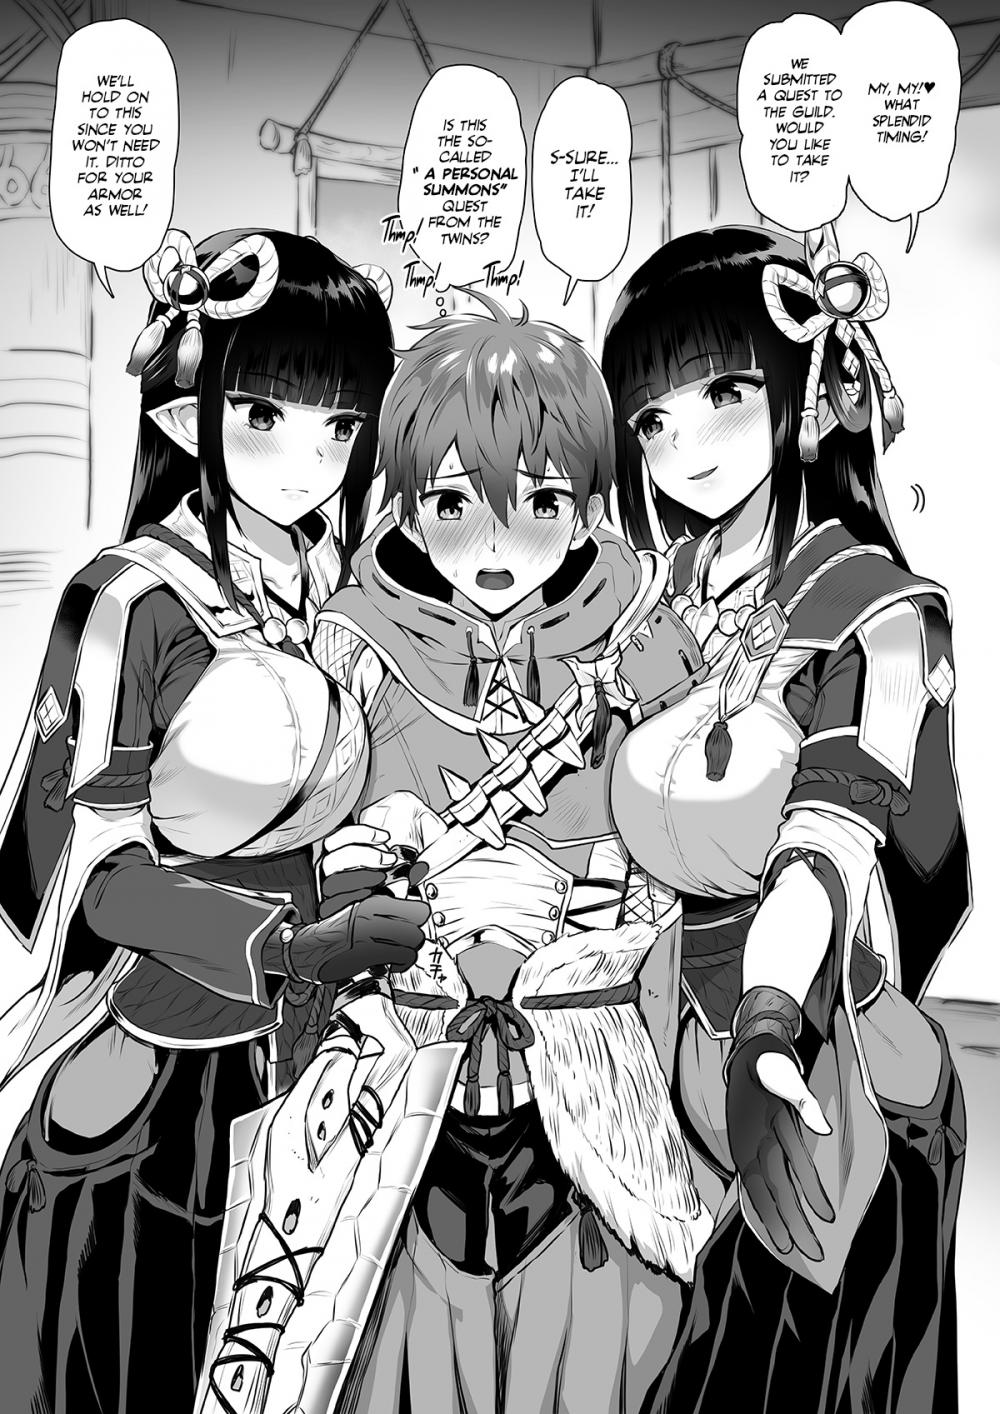 Hentai Manga Comic-A Personal Summons!-Read-1